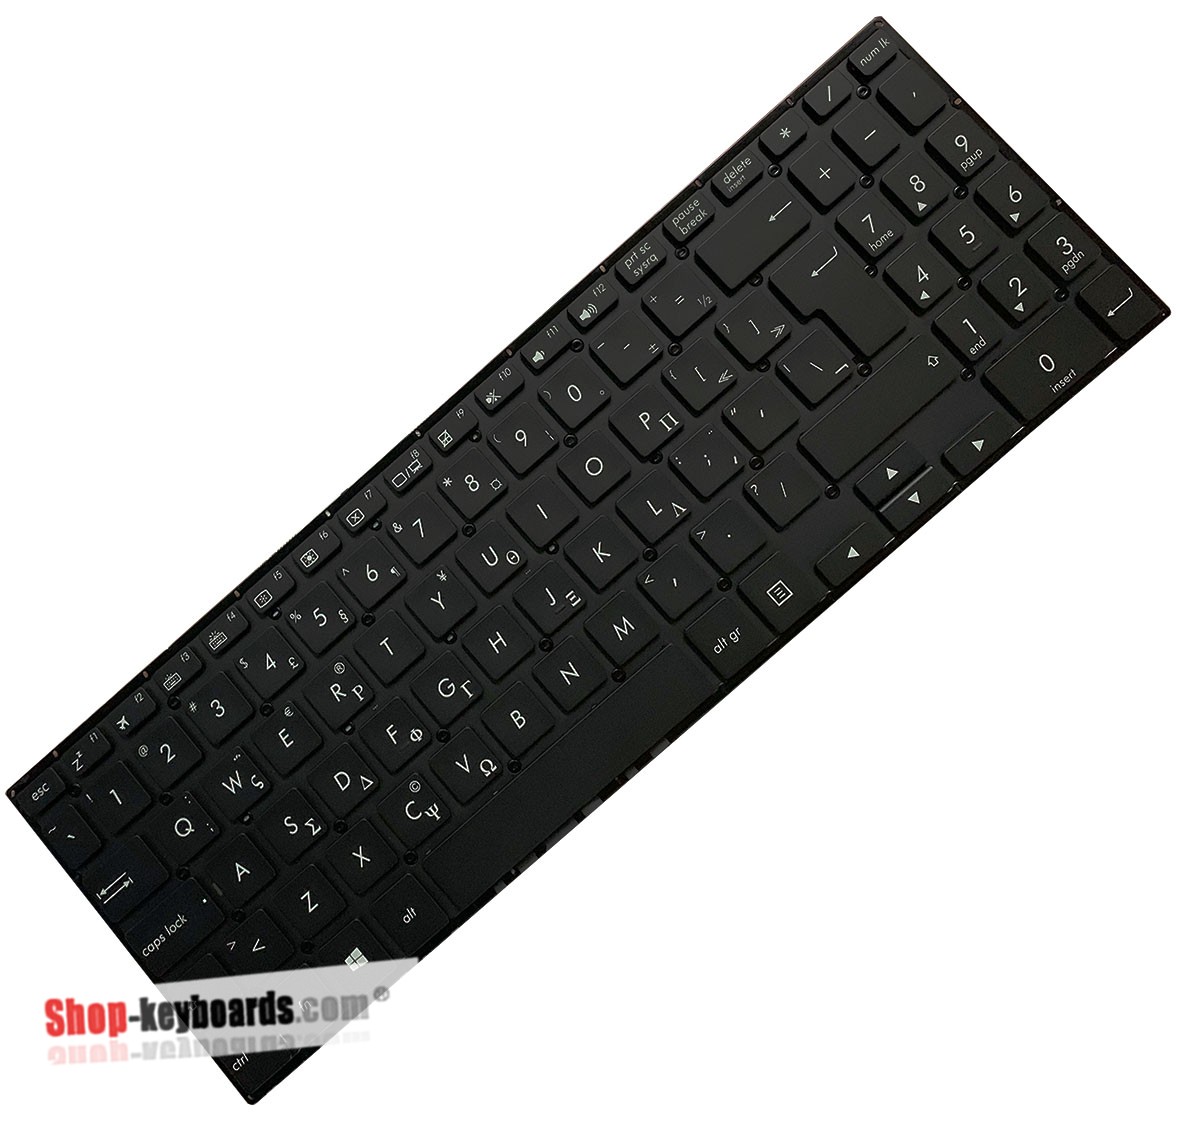 Asus AEBKMY00010 Keyboard replacement